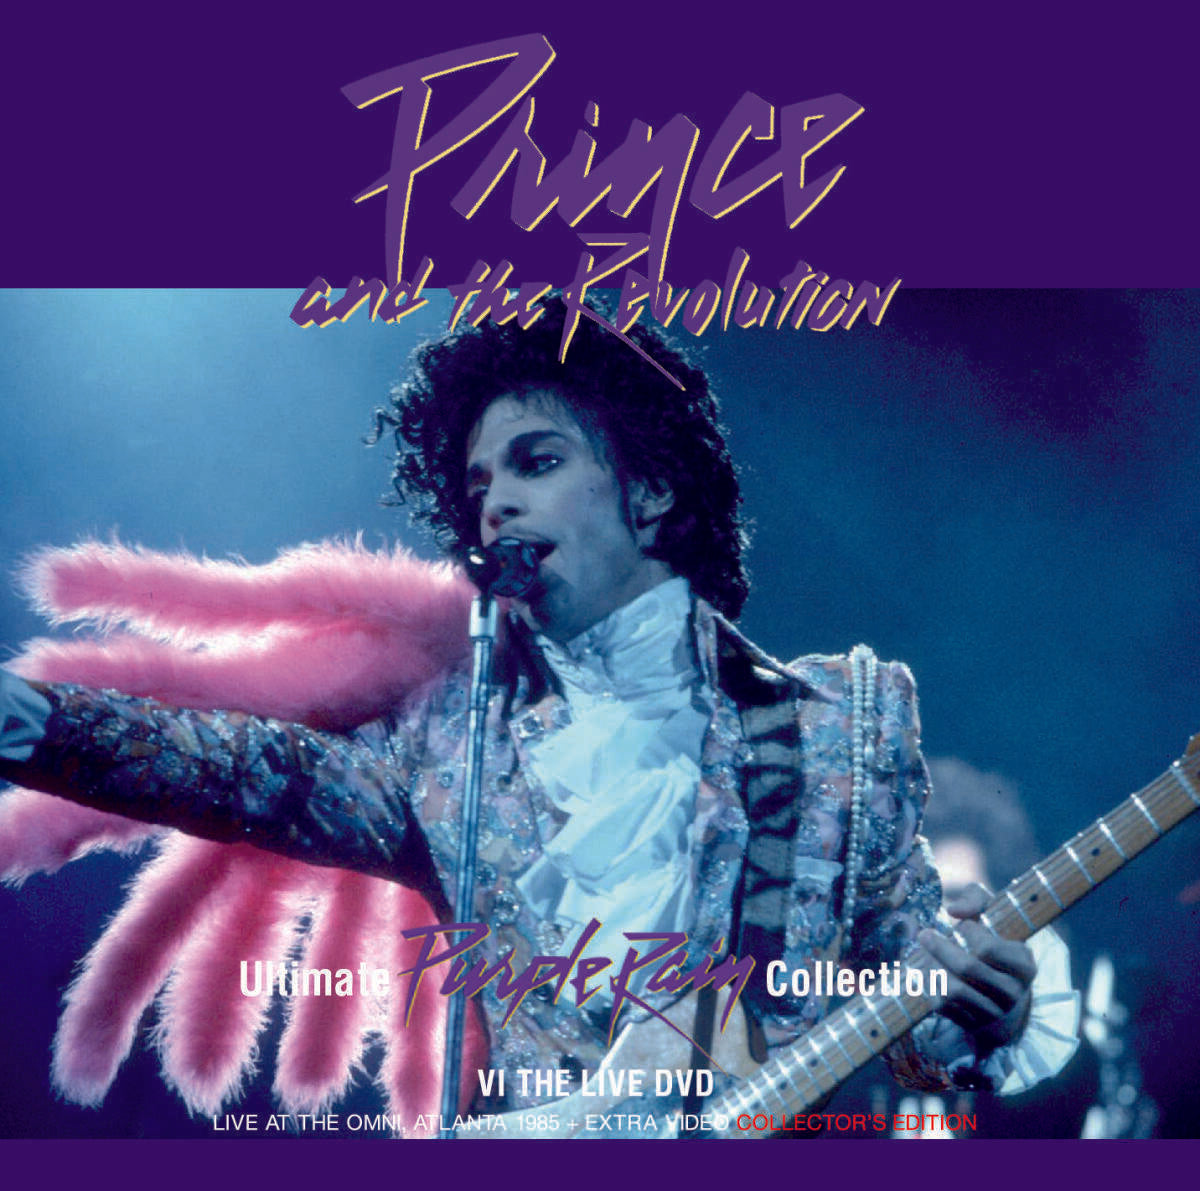 Prince Purple Rain Ultimate Collection VI 2DVD Live 1985 Extra 